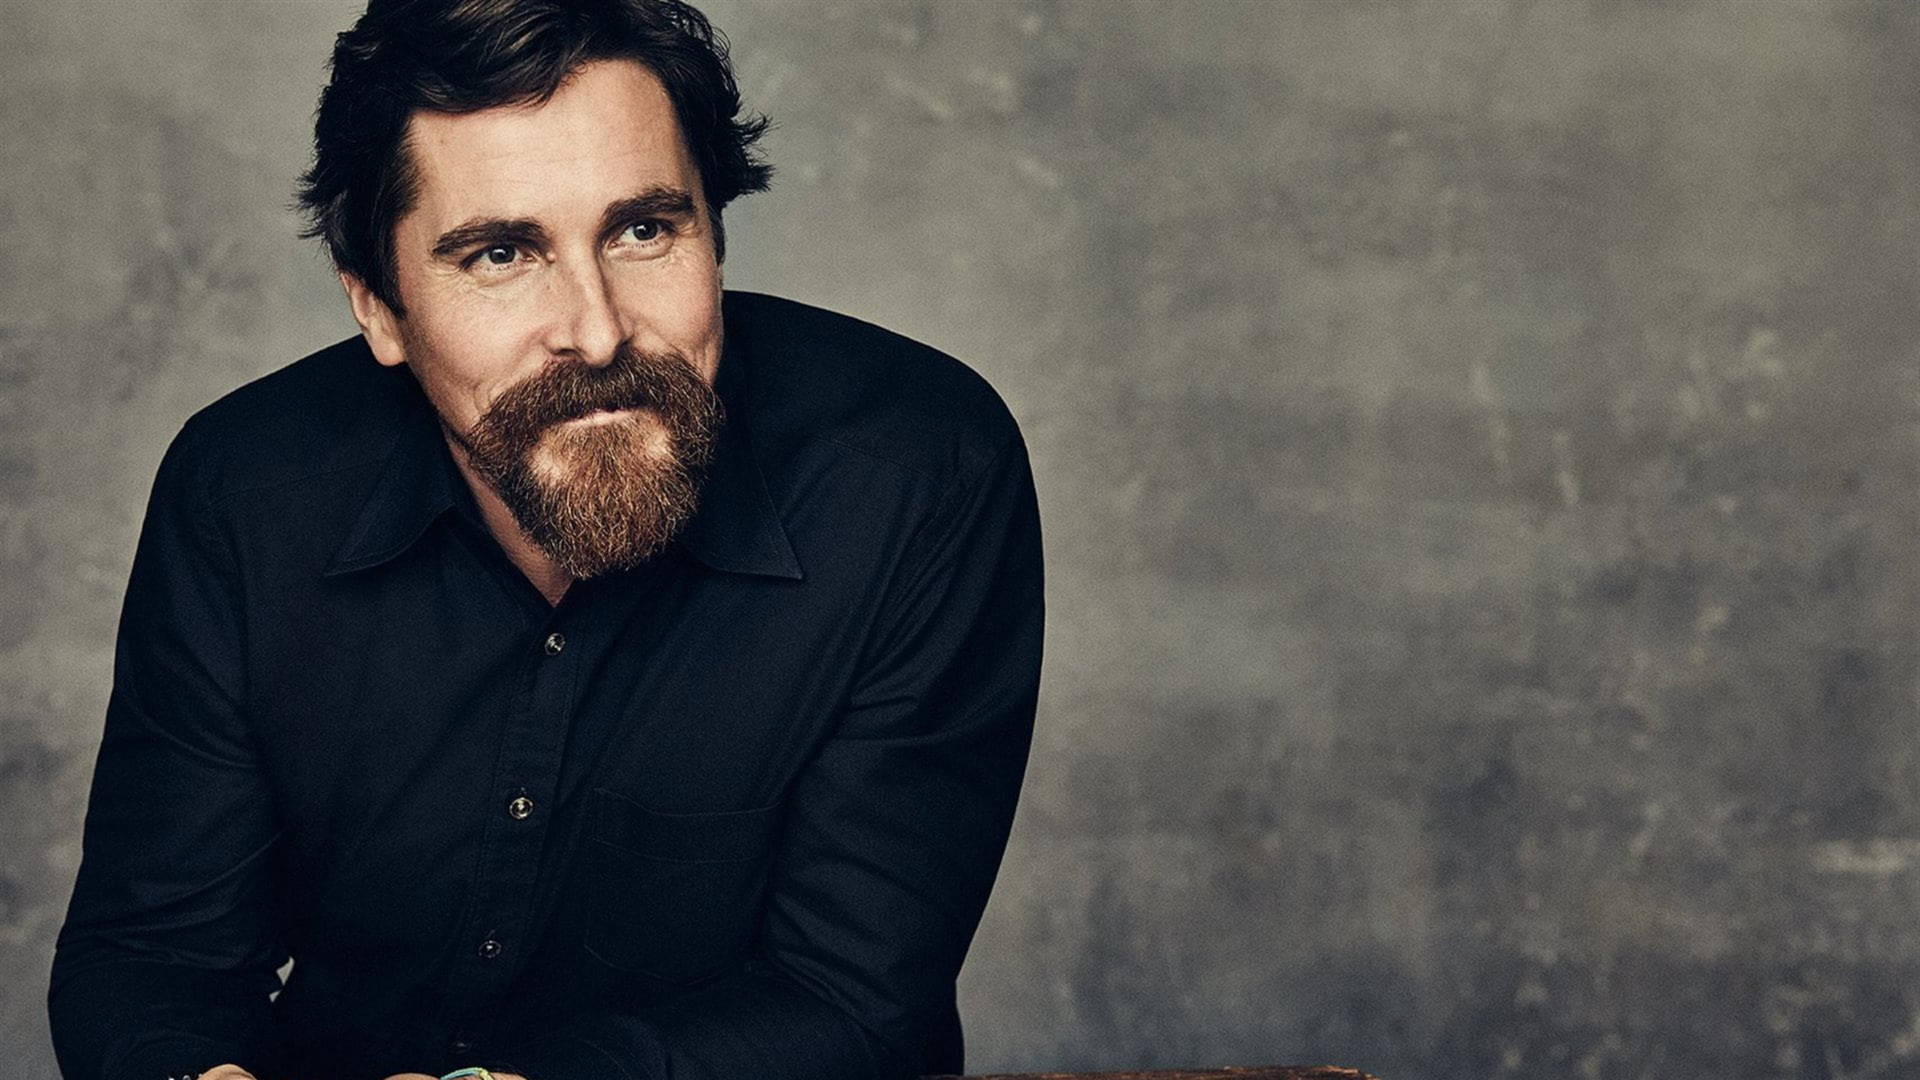 Christian Bale Classic Photo Background